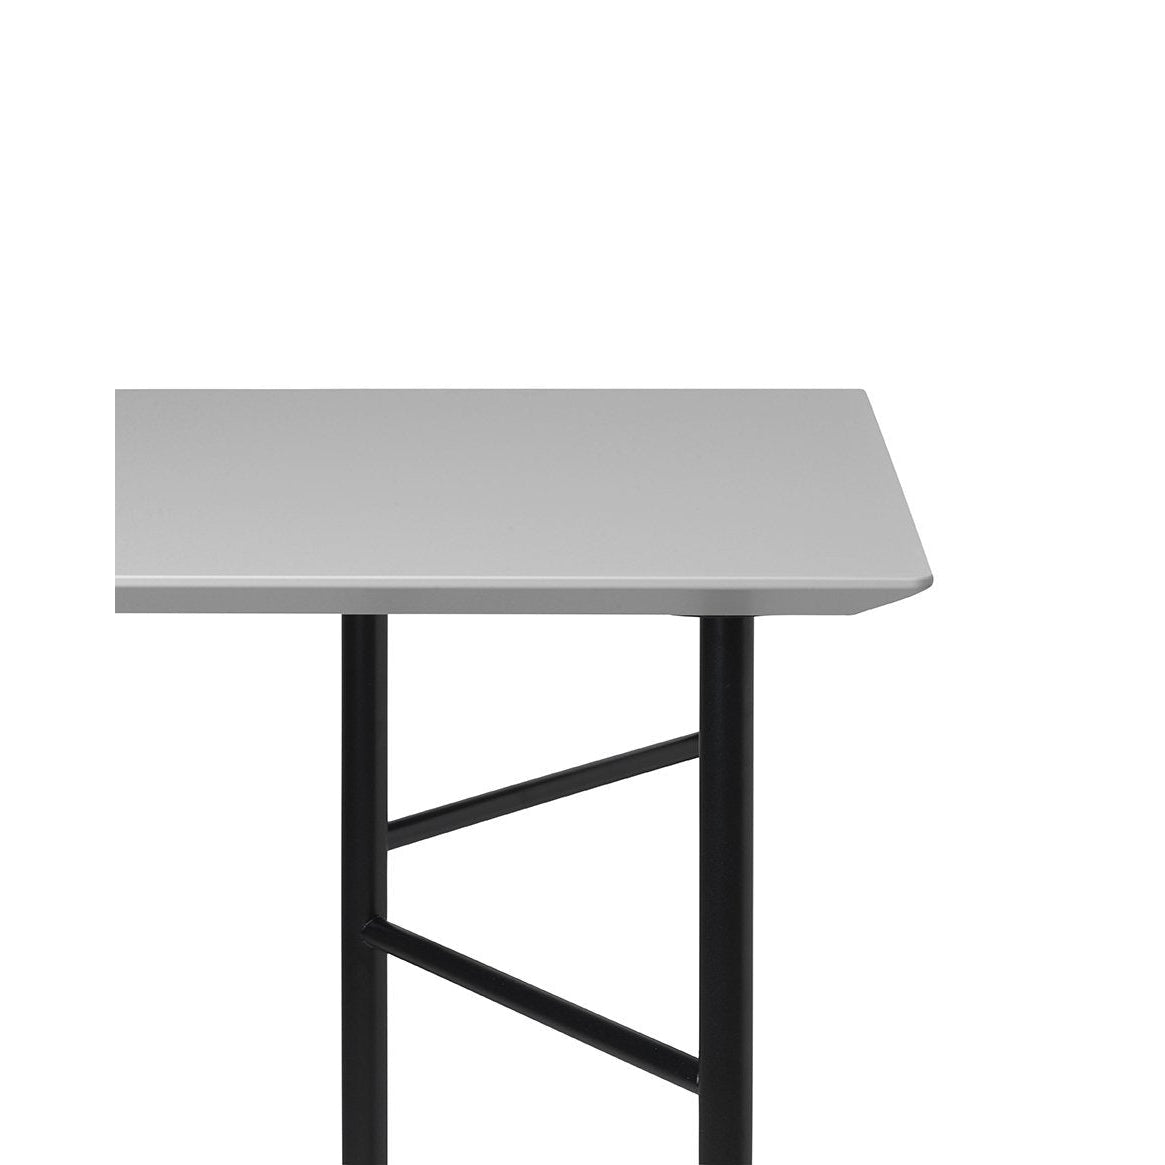 Ferm Living Mingle Desk oben, hellgrau, 135 cm